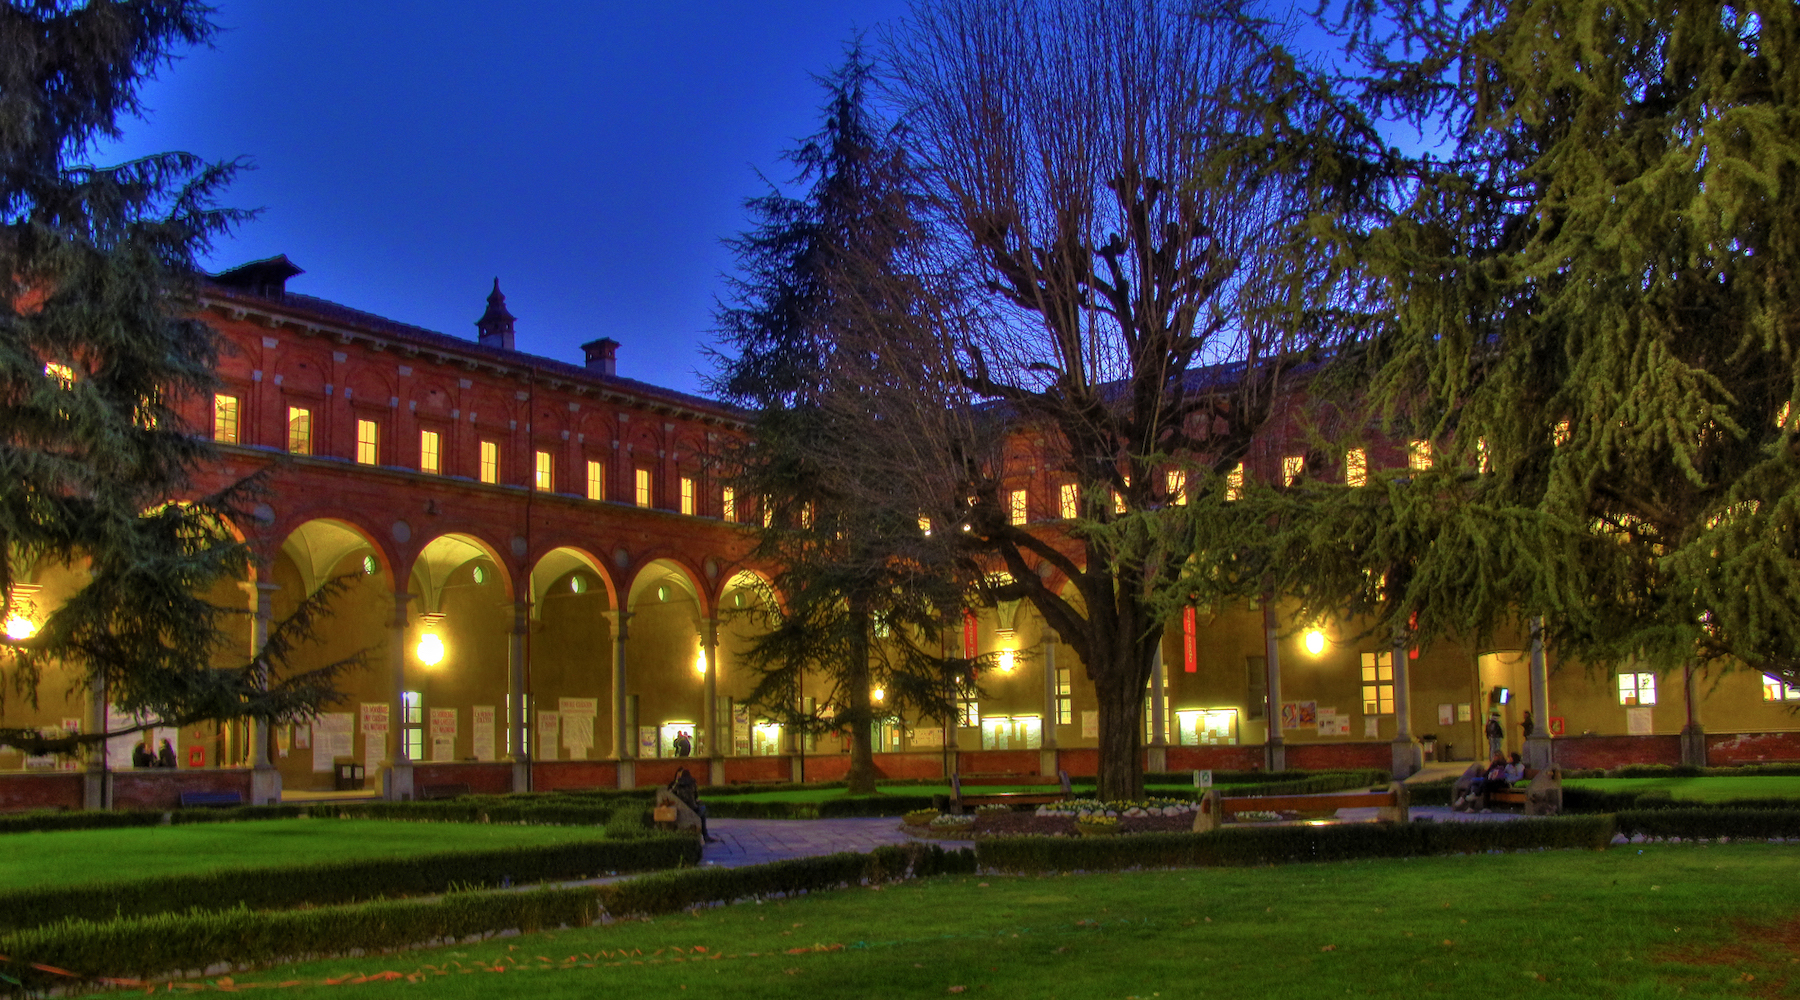 Image of the Università Cattolica Sacro Cuore's courtyard